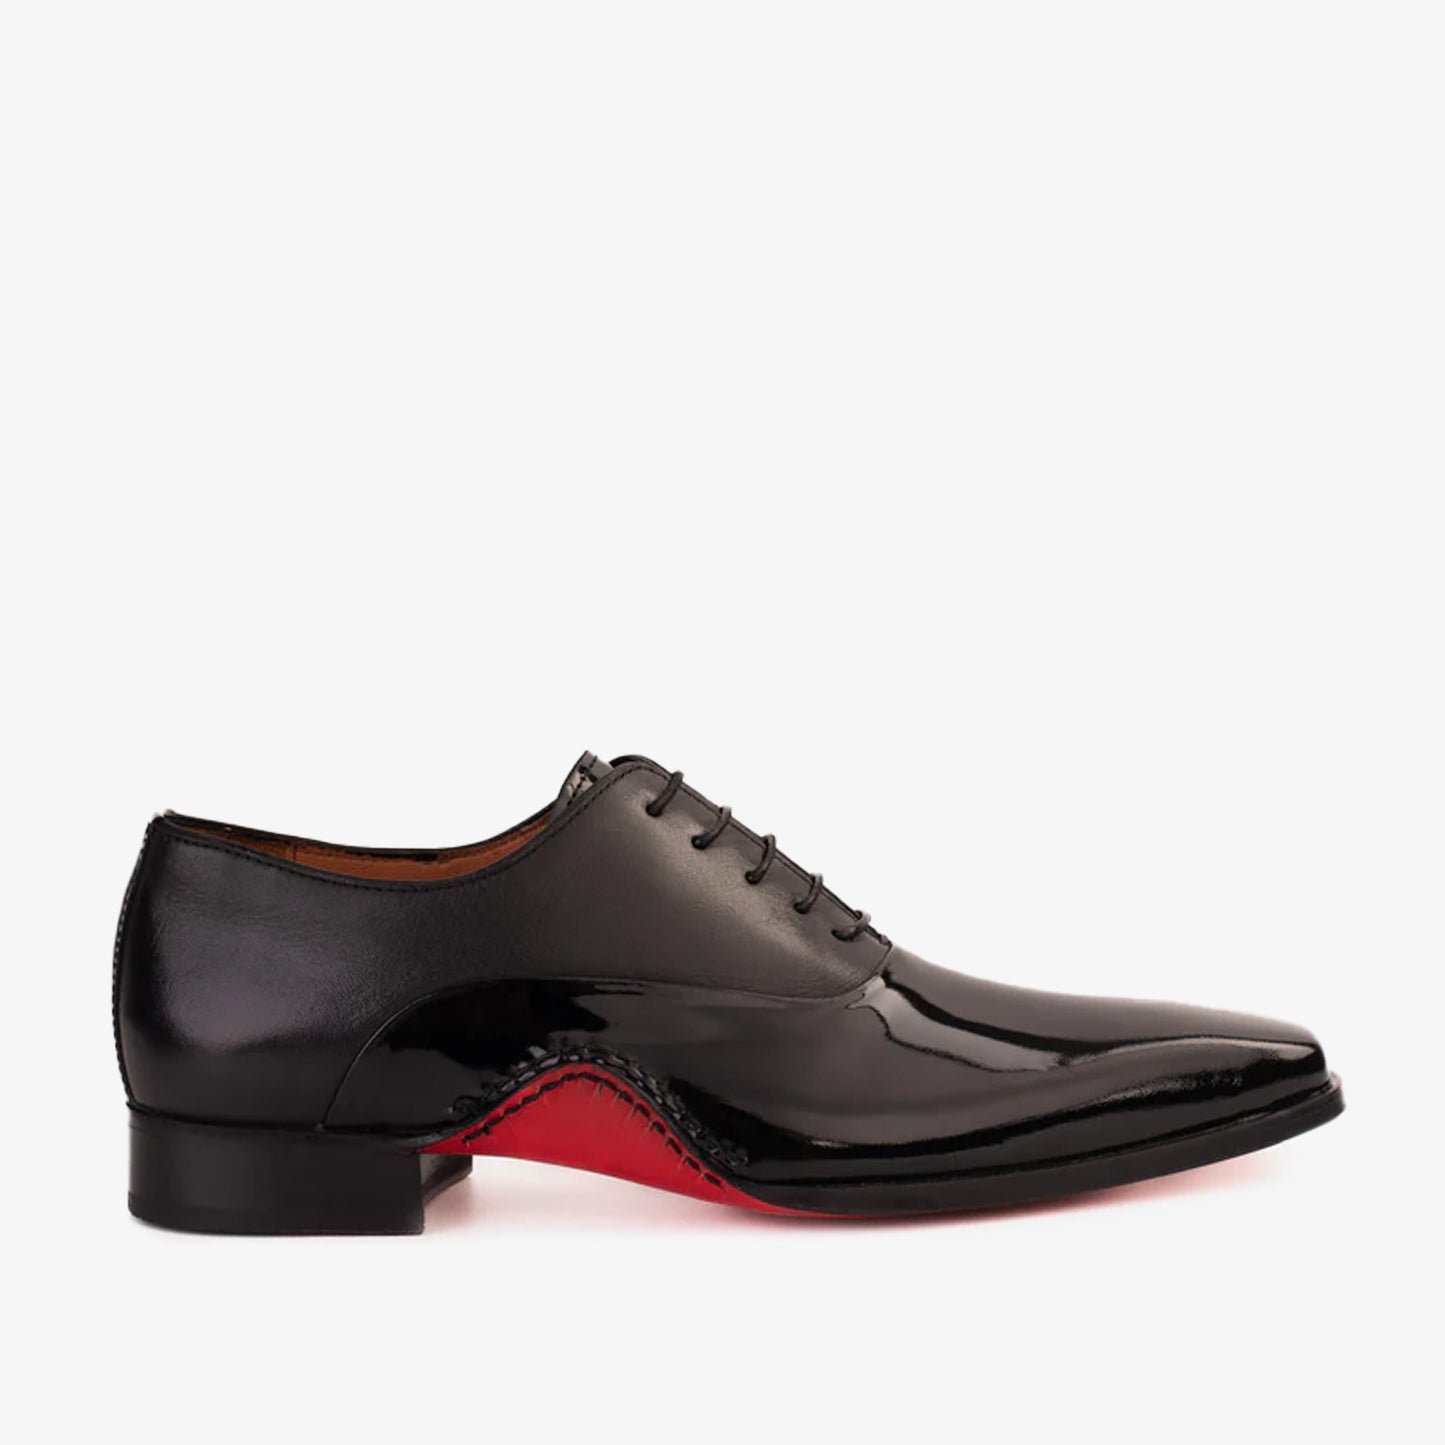 The Royal Hand Craft Black Patent Leather Plain Toe Oxford Men Shoe ...